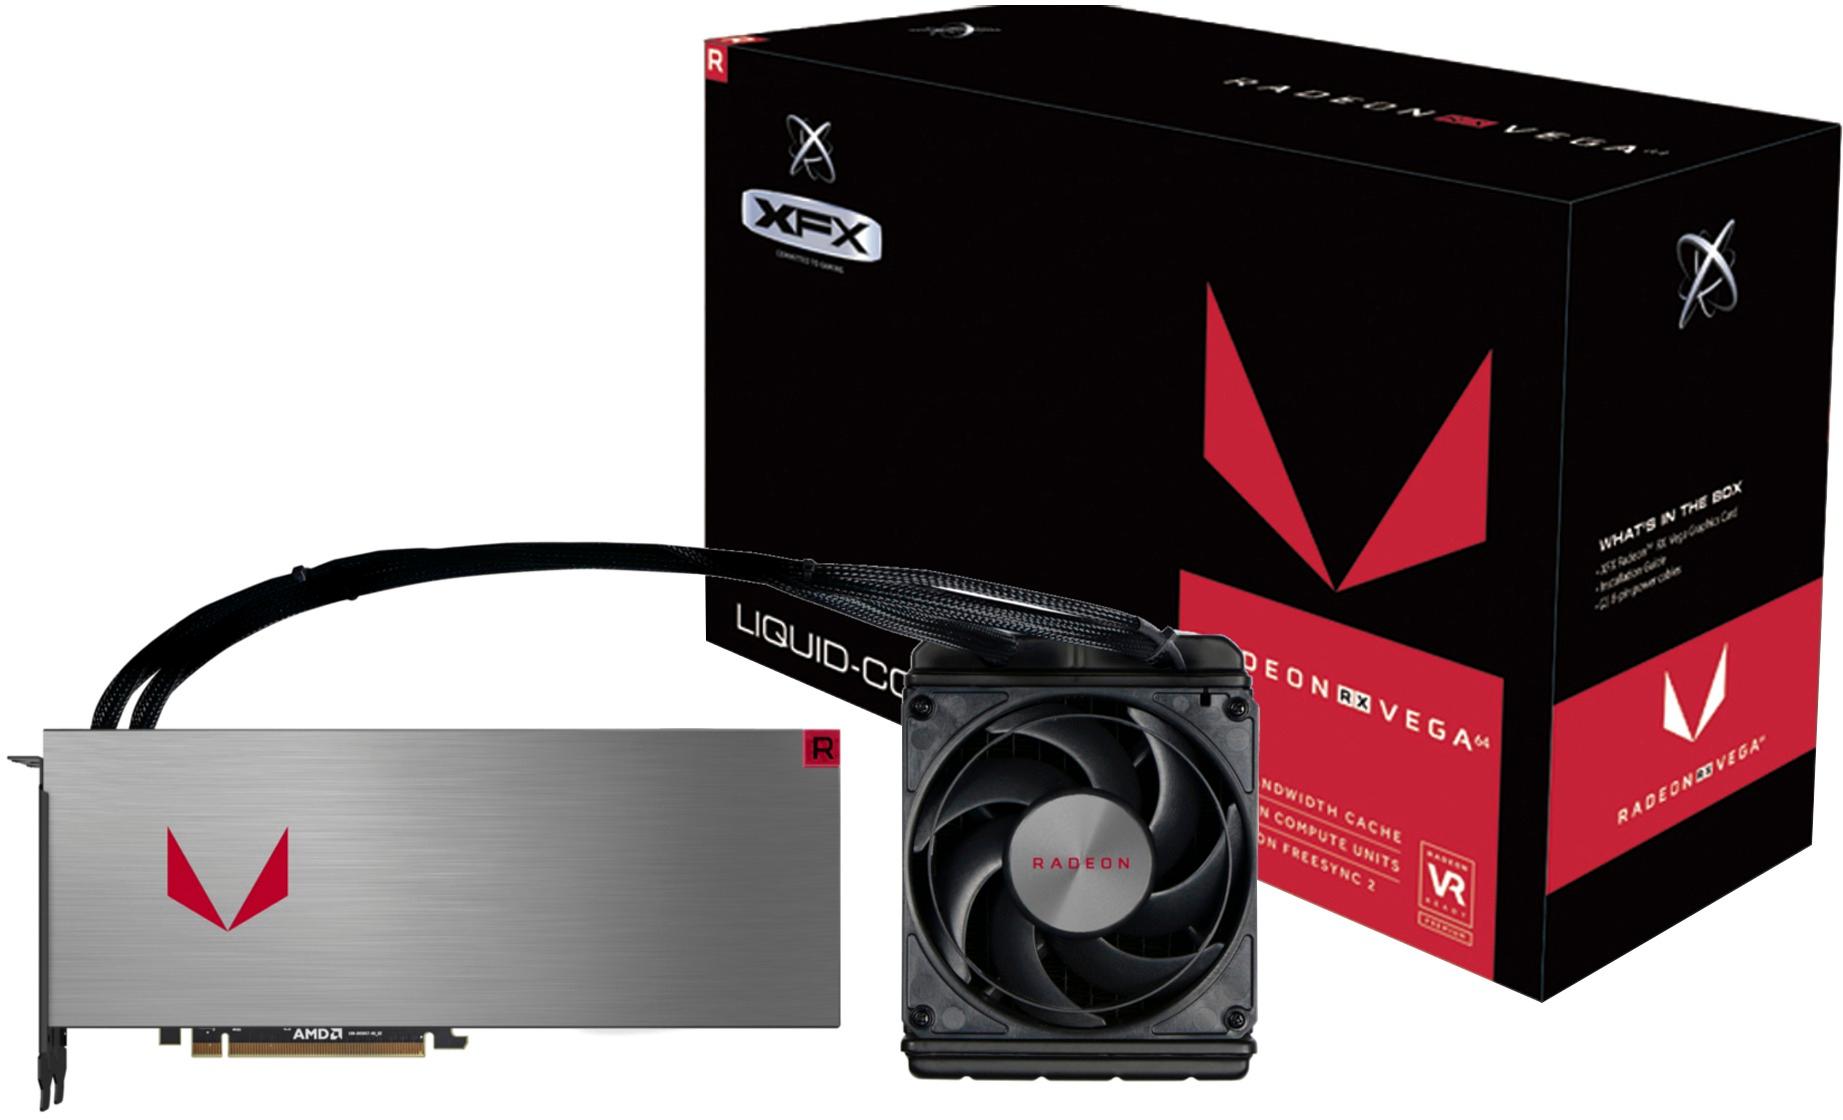 Best Buy: XFX AMD Radeon RX Vega 64 8GB HBM2 PCI Express 3.0